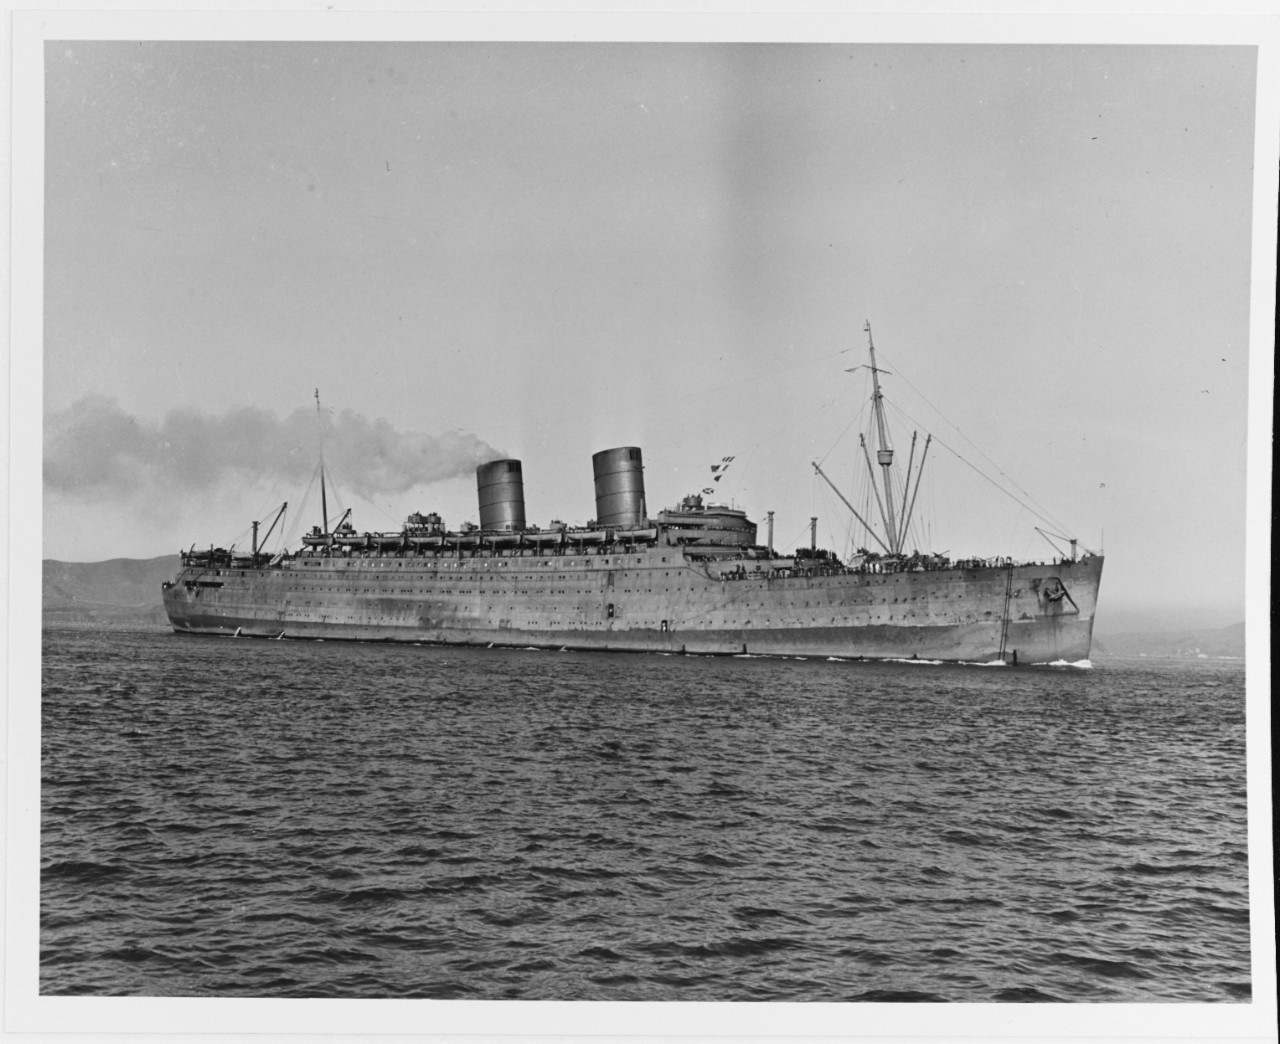 S.S. MAURETANIA (British passenger ship, 1939-1965)